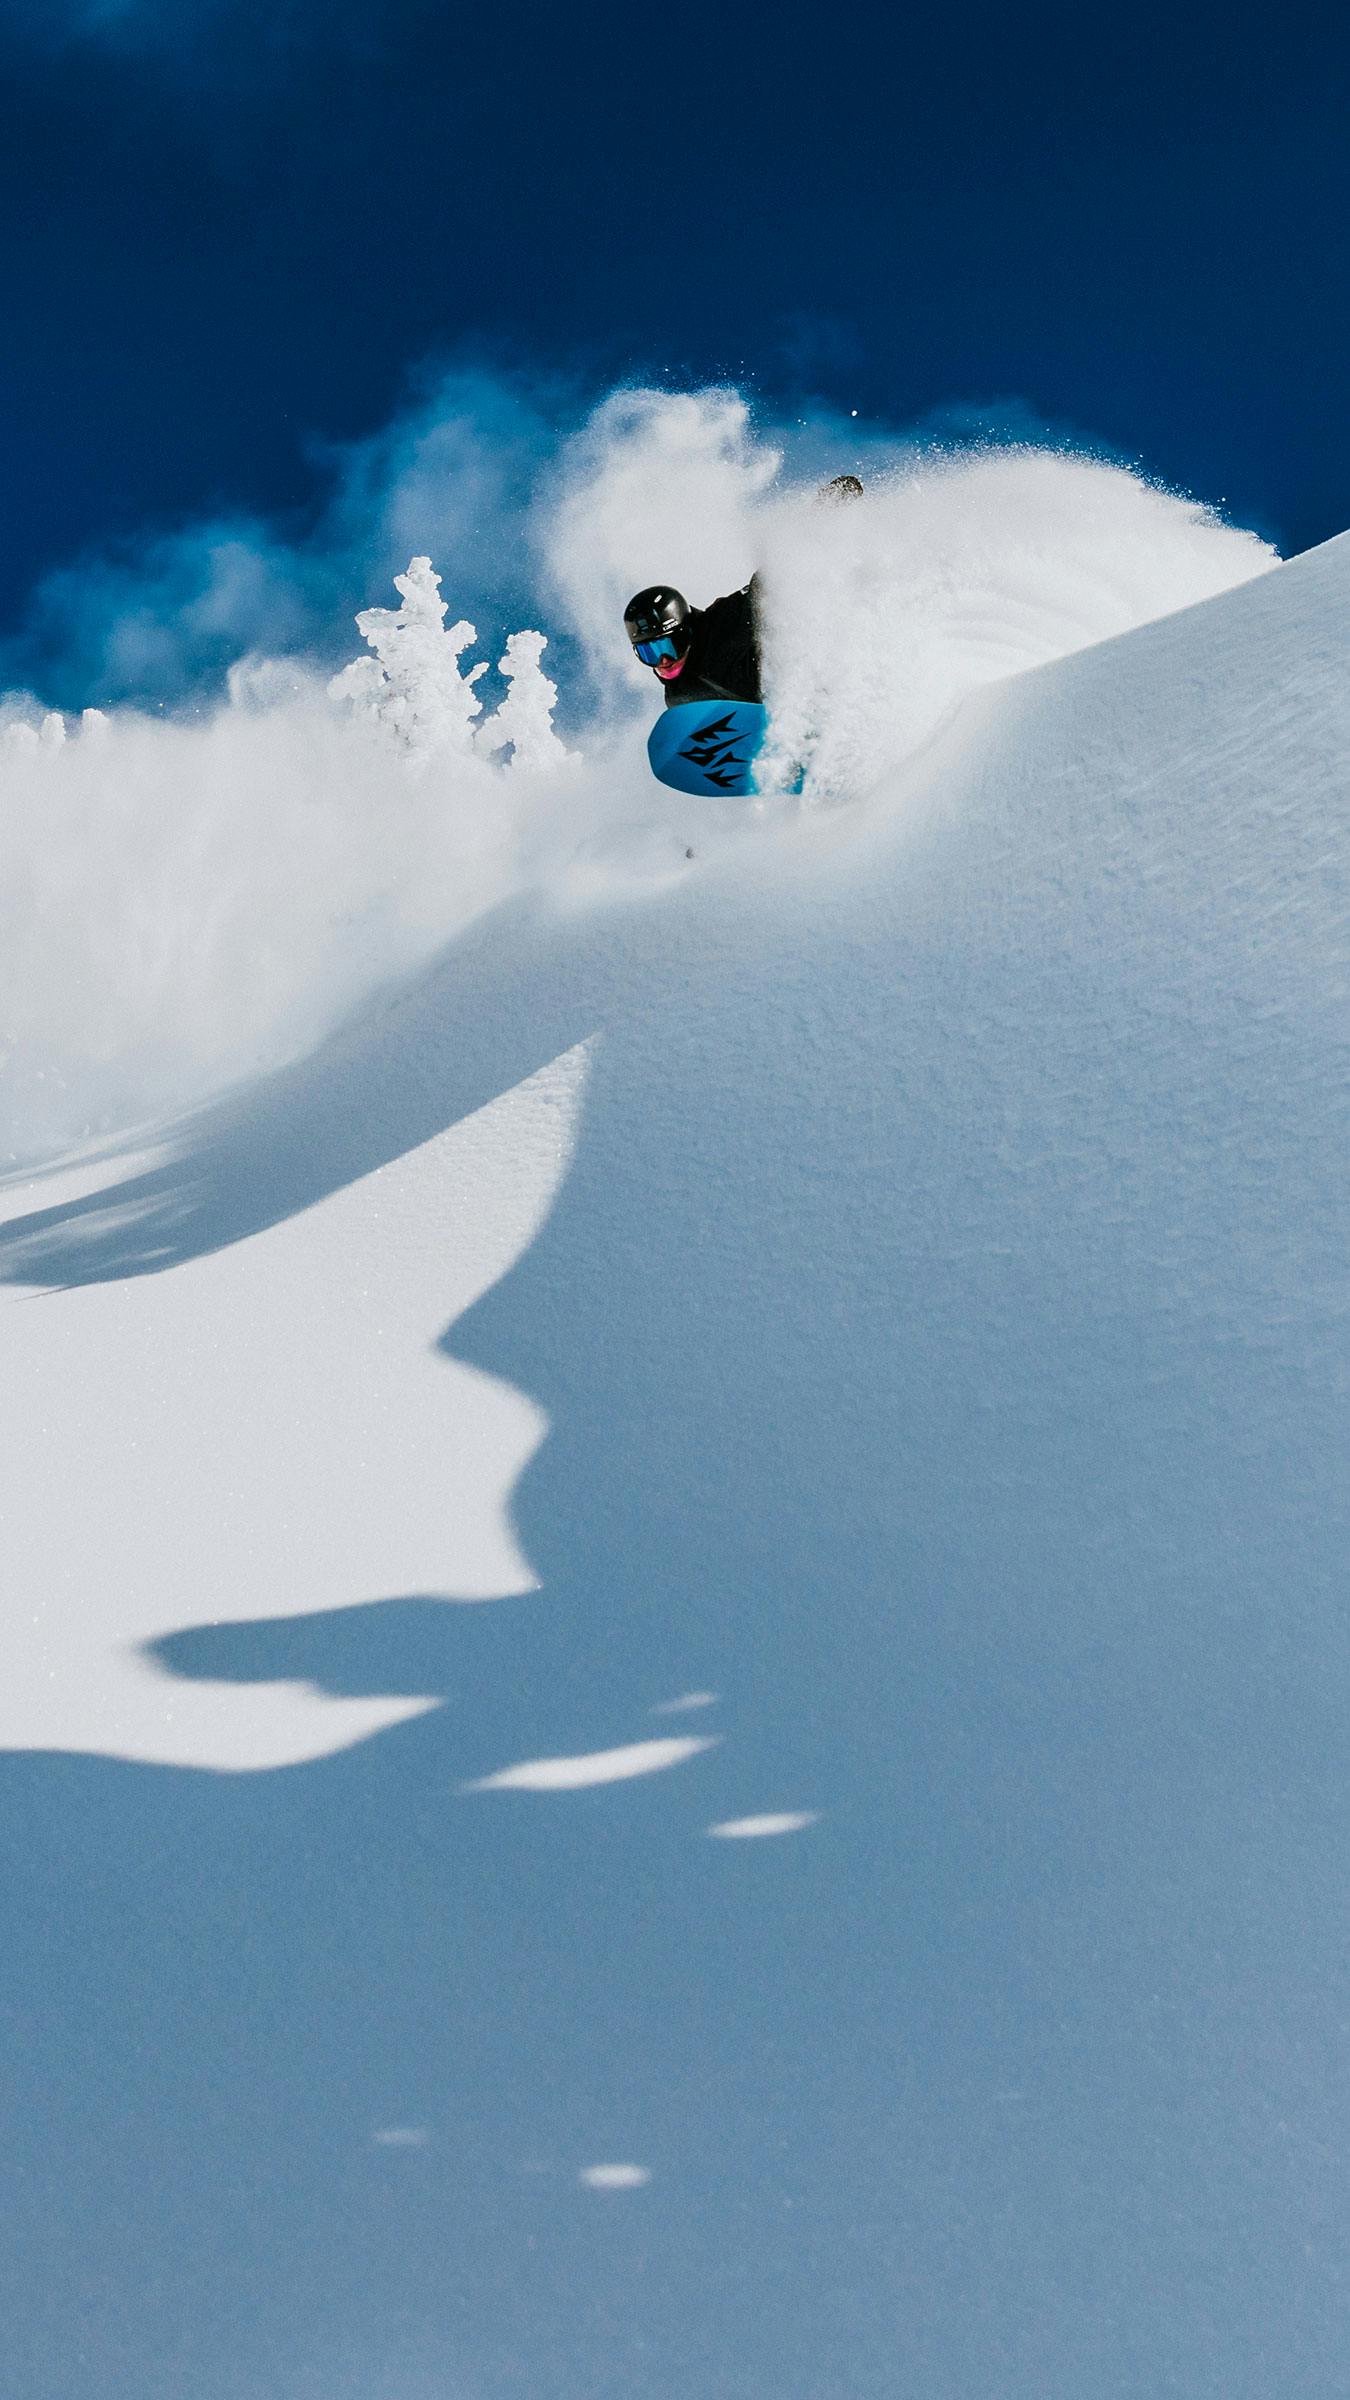 Snowboarder enjoys bluebird powder day